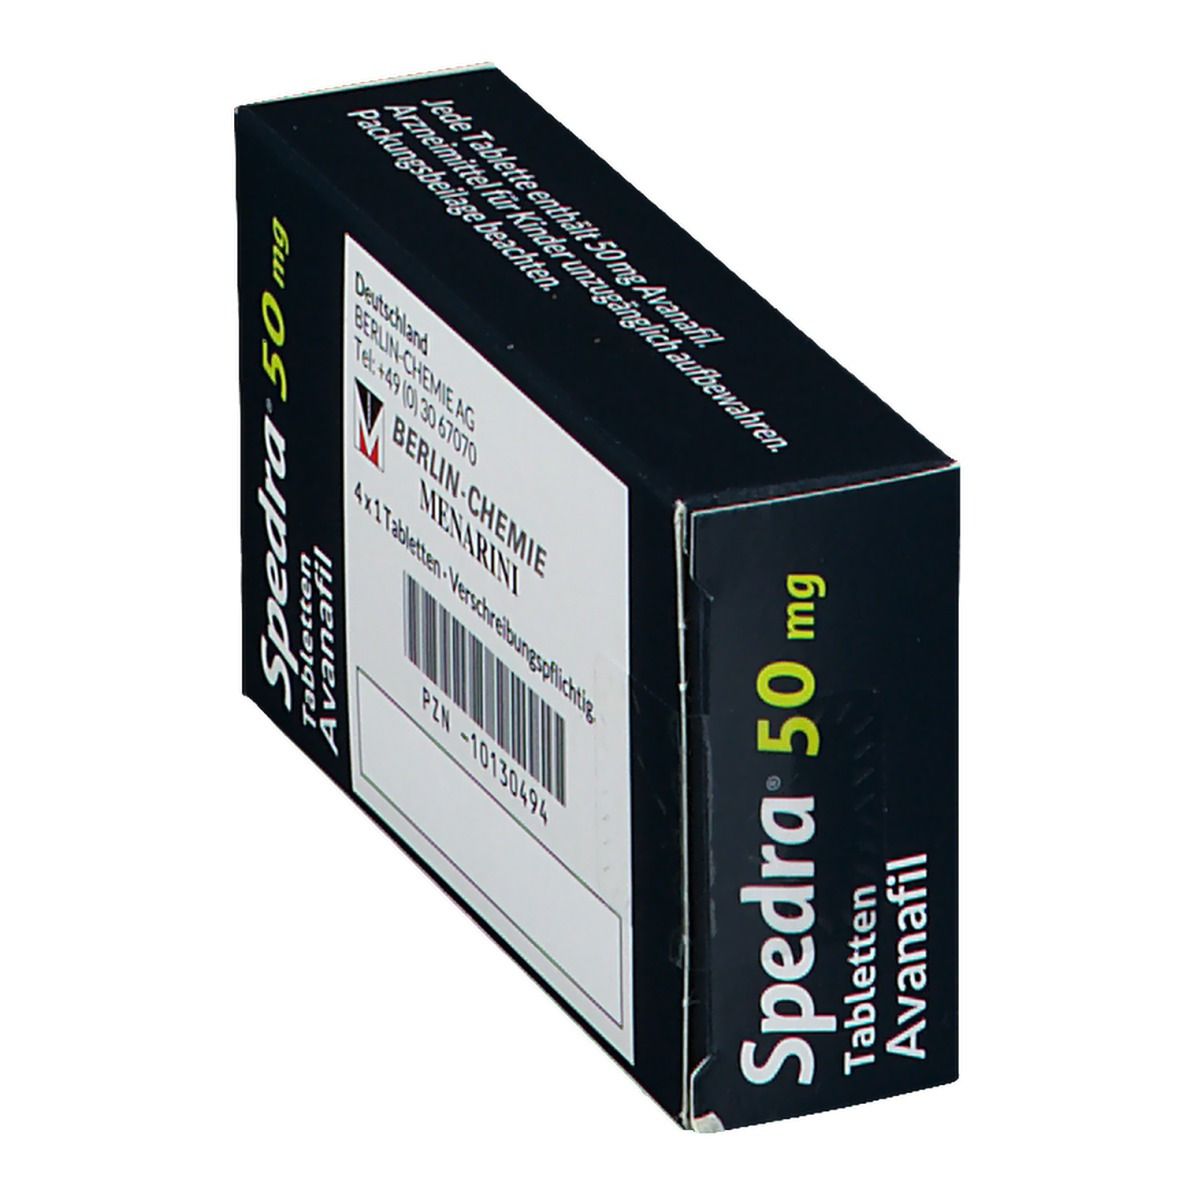 Spedra® 50 mg